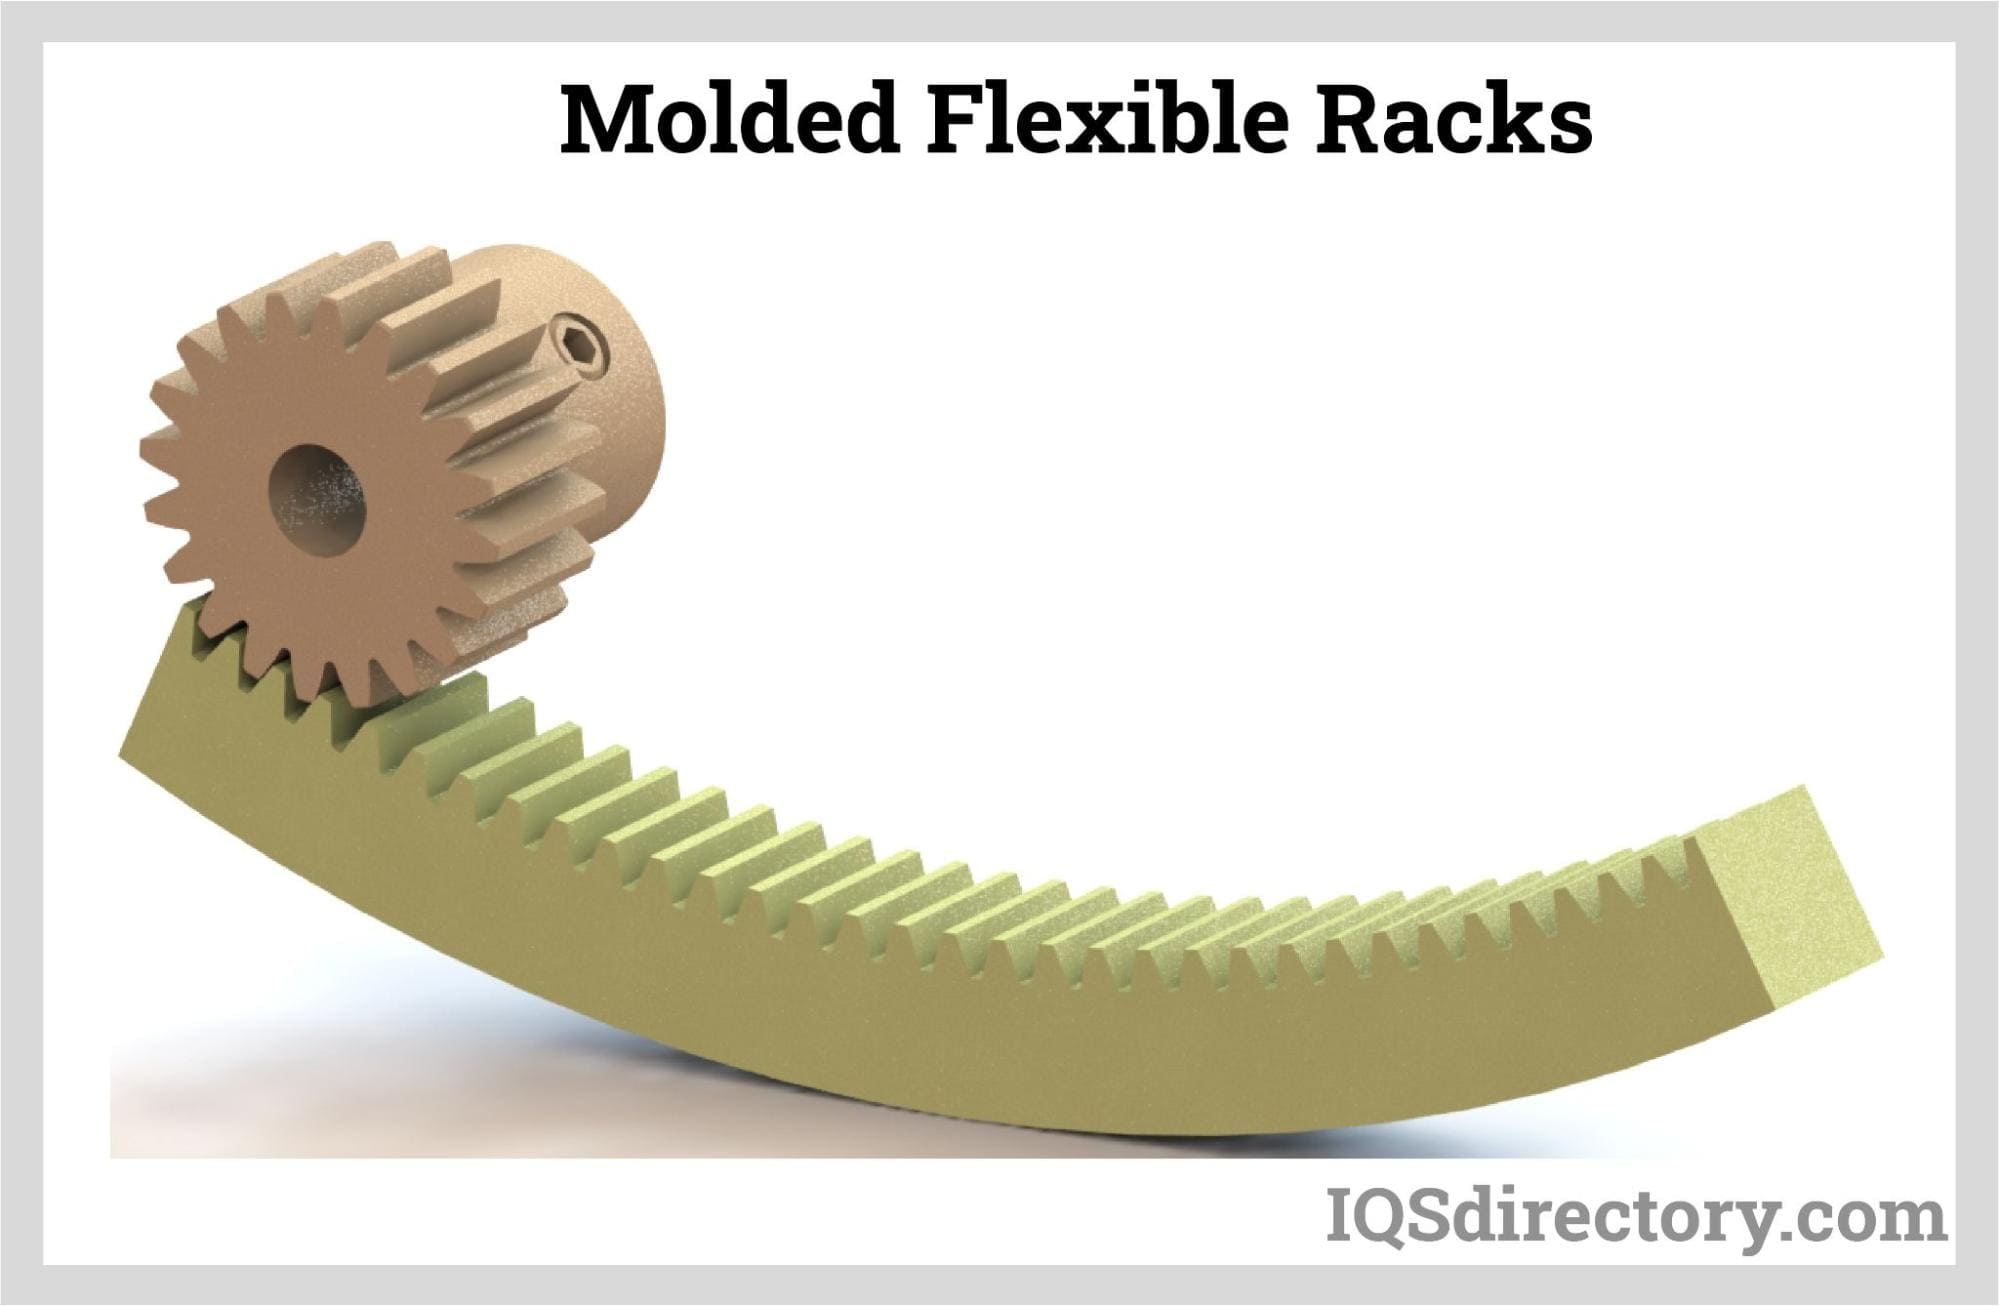 Molded Flexible Racks